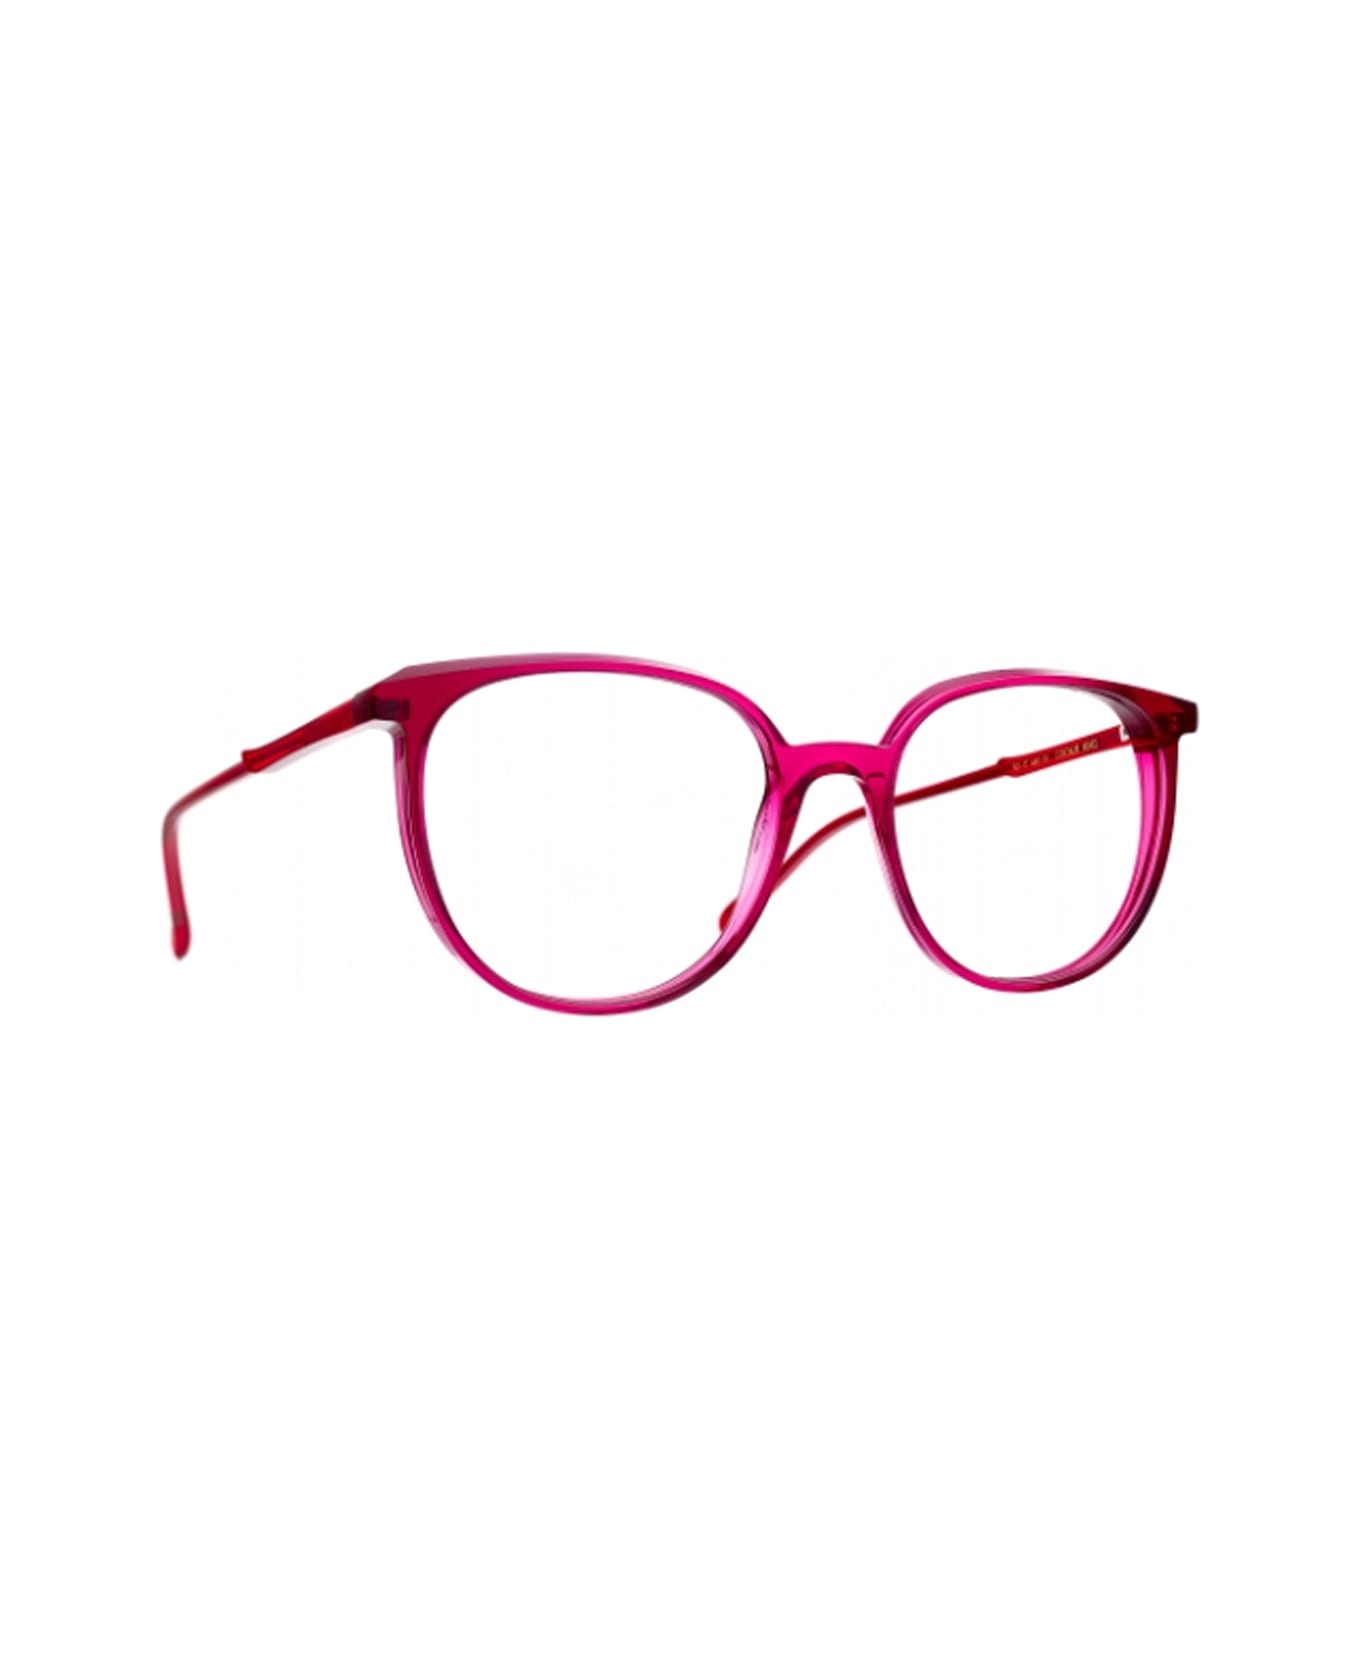 Blush Cookie Glasses - Rosa